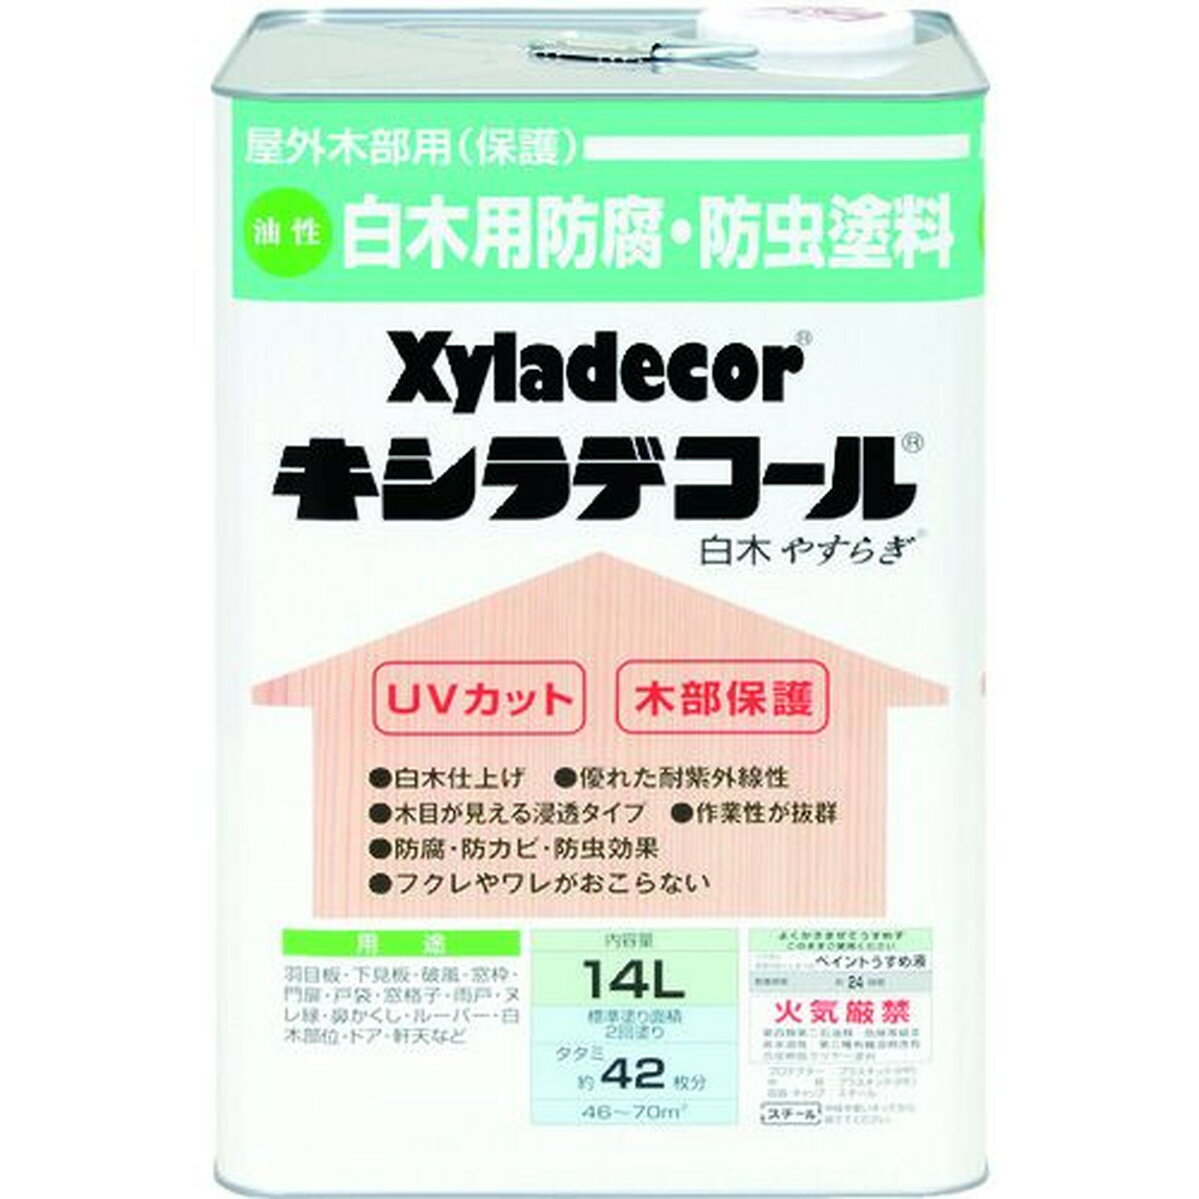 KANSAI キシラデコール 白木 やすらぎ 14L 1缶 (00017670050000)